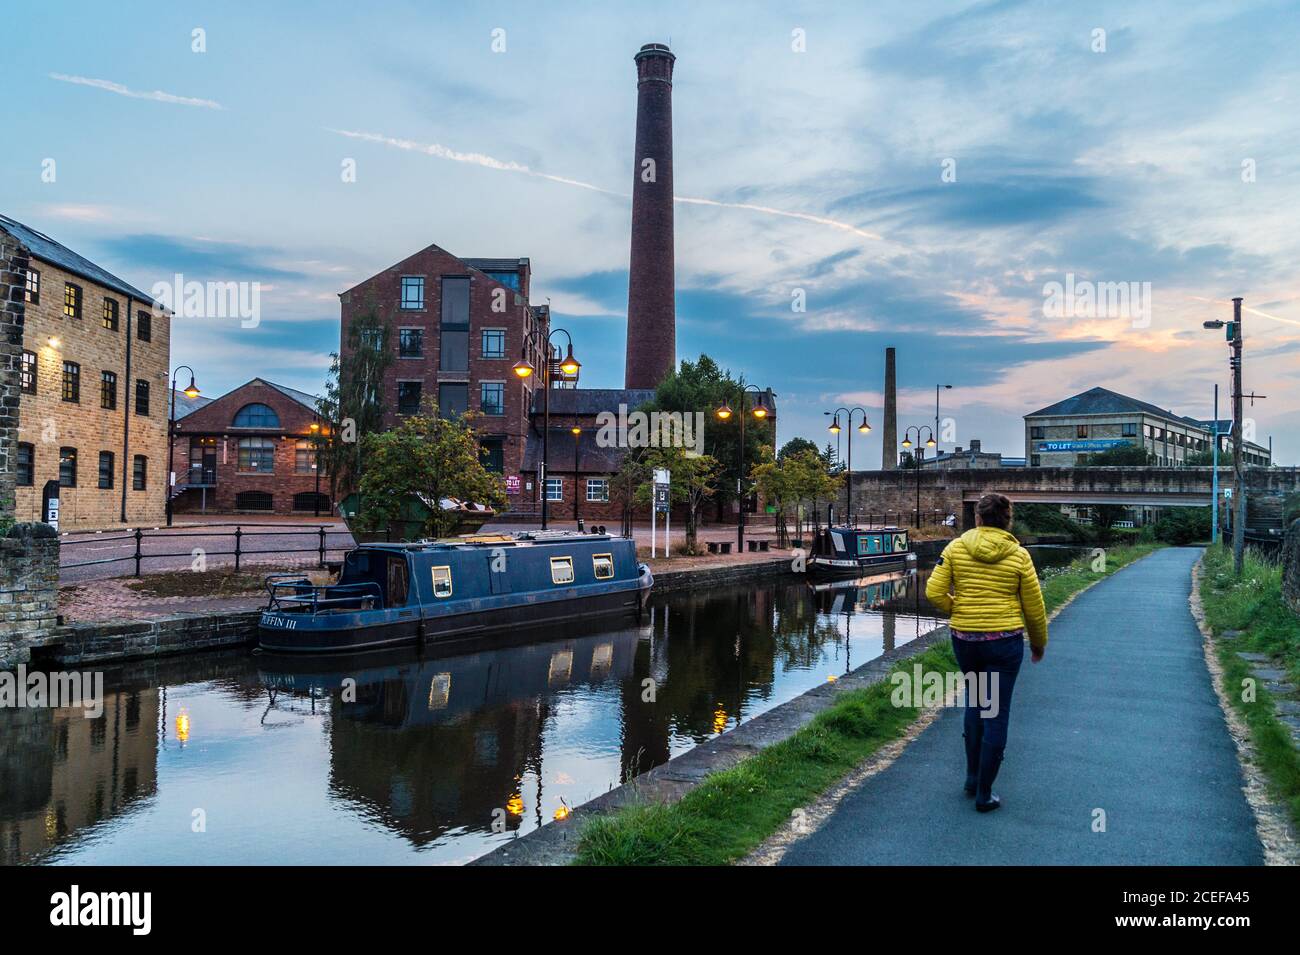 Antiguo molino y chimenea, Salt's Wharf, Leeds & Liverpool canal, Shipley, West Yorkshire, Inglaterra al atardecer Foto de stock